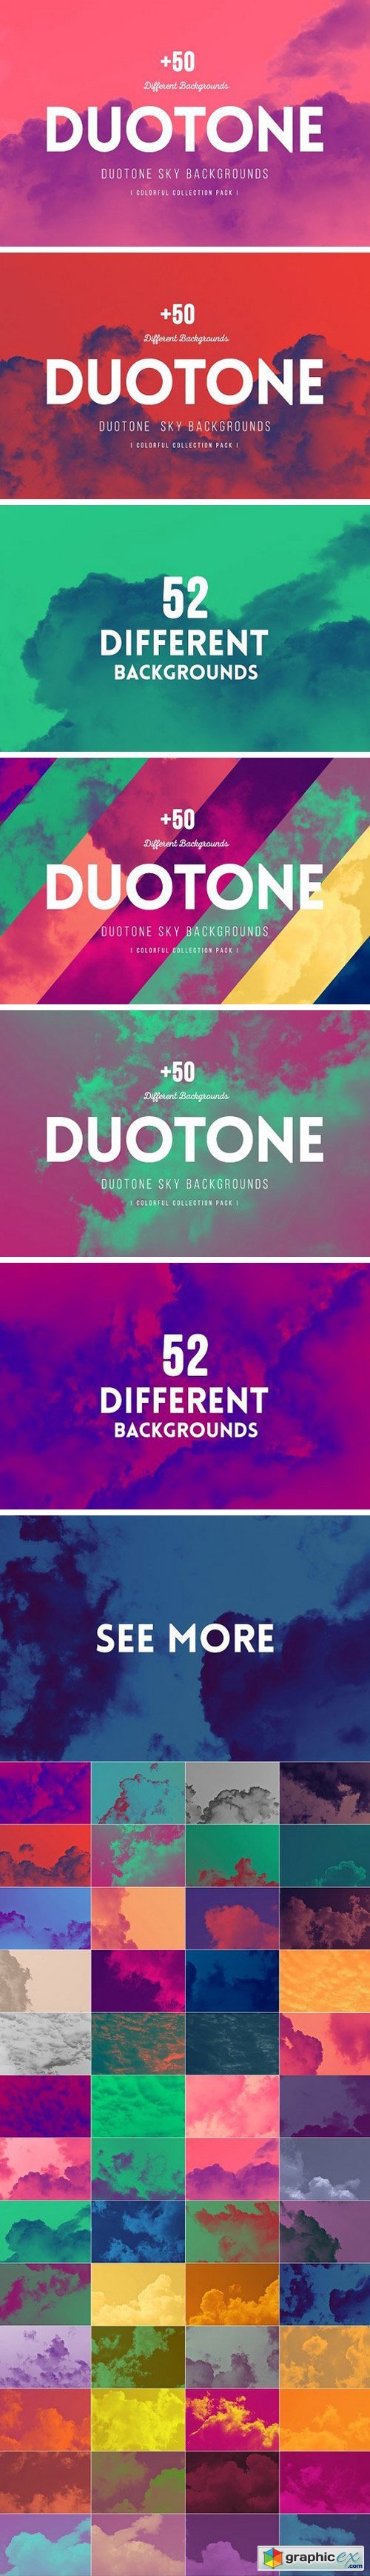 +50 Duotone SKY Backgrounds